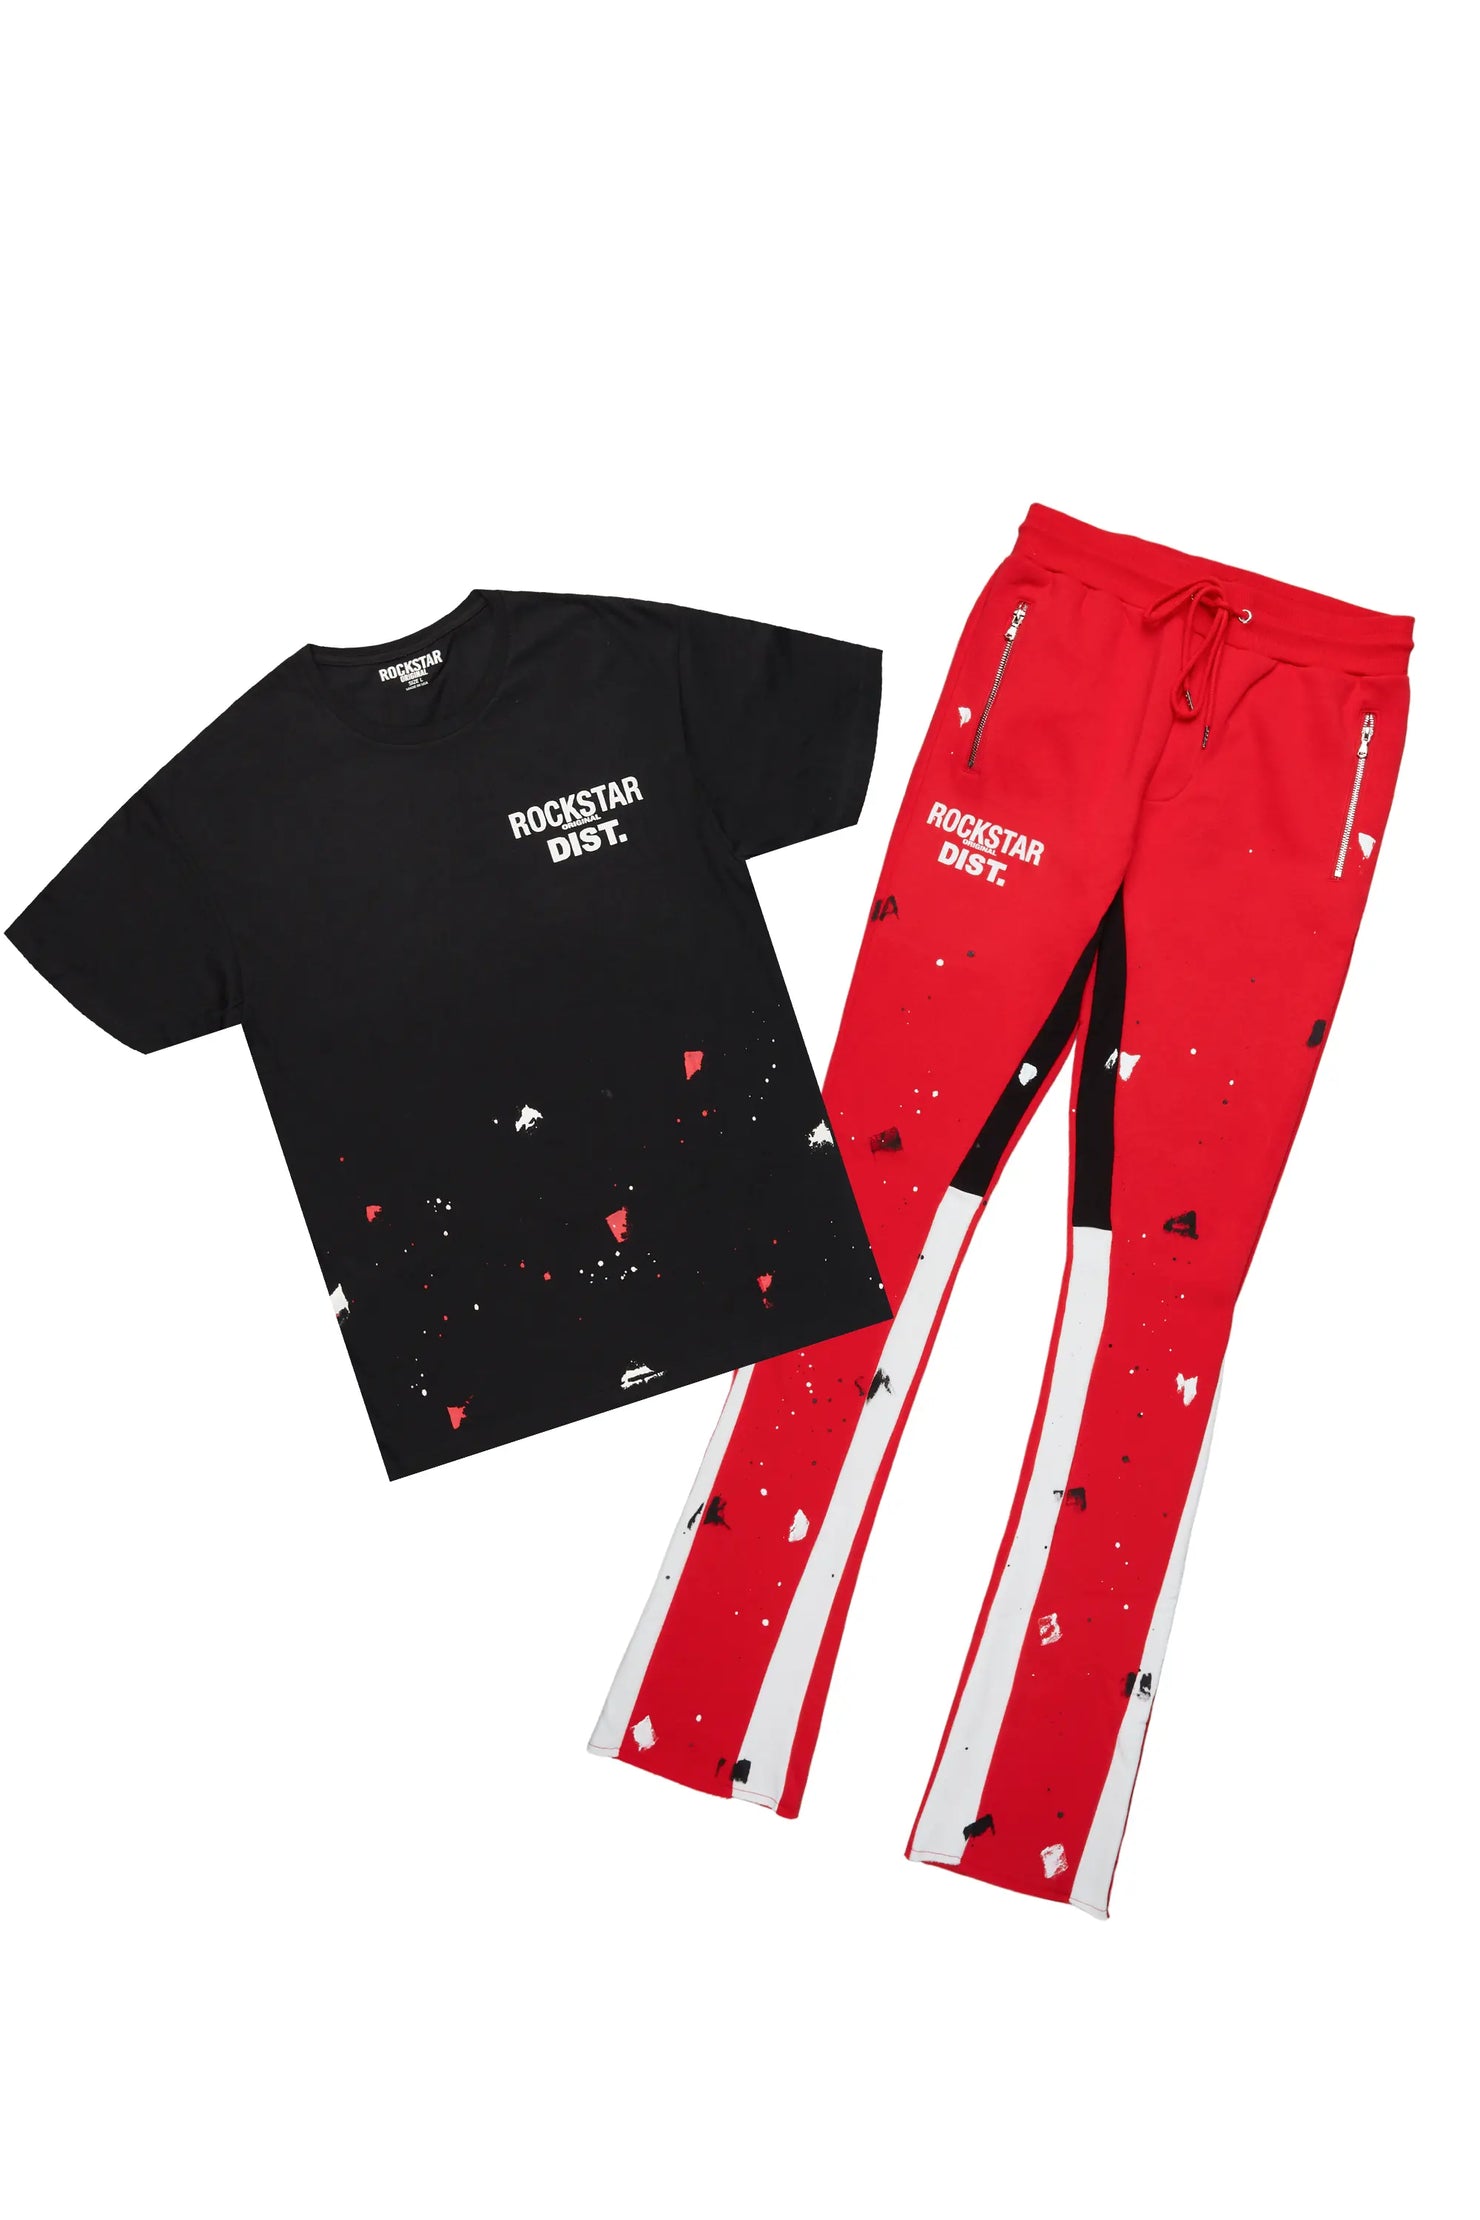 Raffer Black/Red T-Shirt/Stacked Flare Pant Set